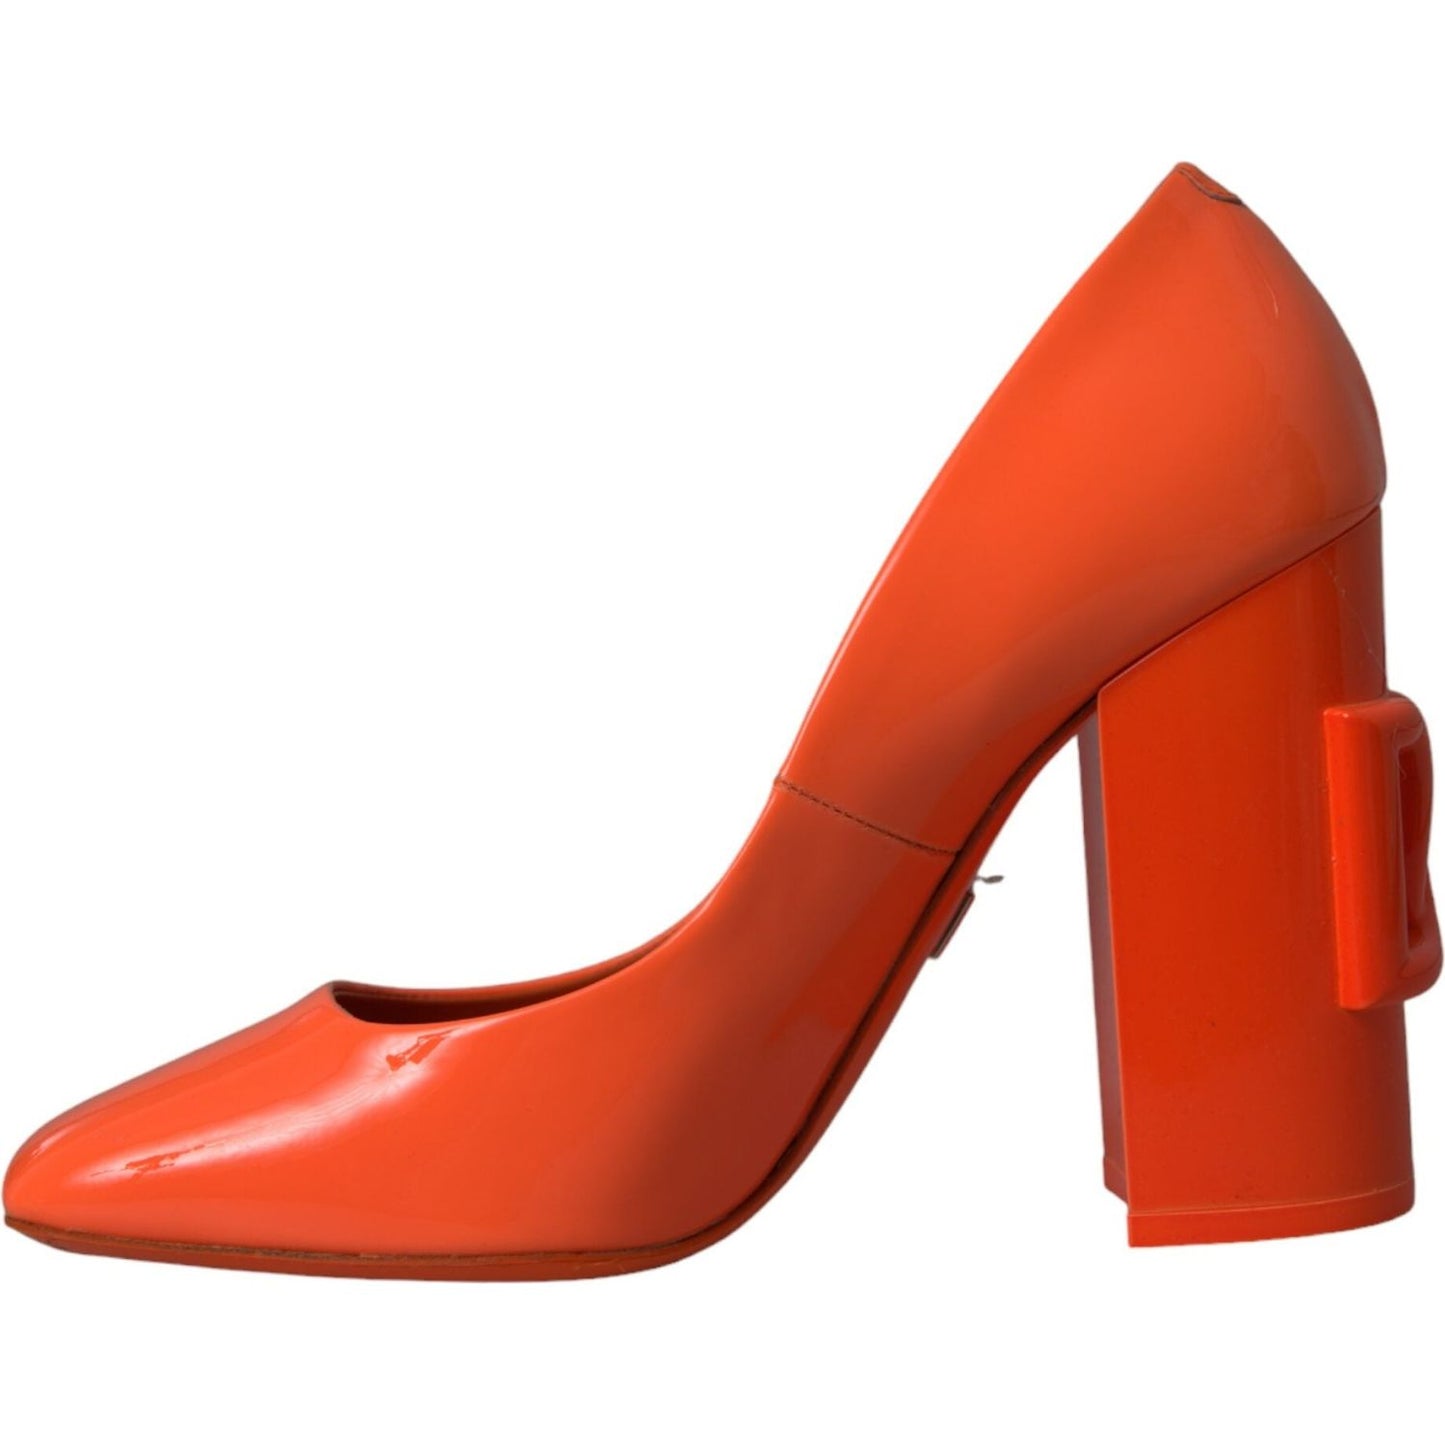 Dolce & Gabbana Orange Patent Leather Logo Heels Pumps Shoes orange-patent-leather-logo-heels-pumps-shoes